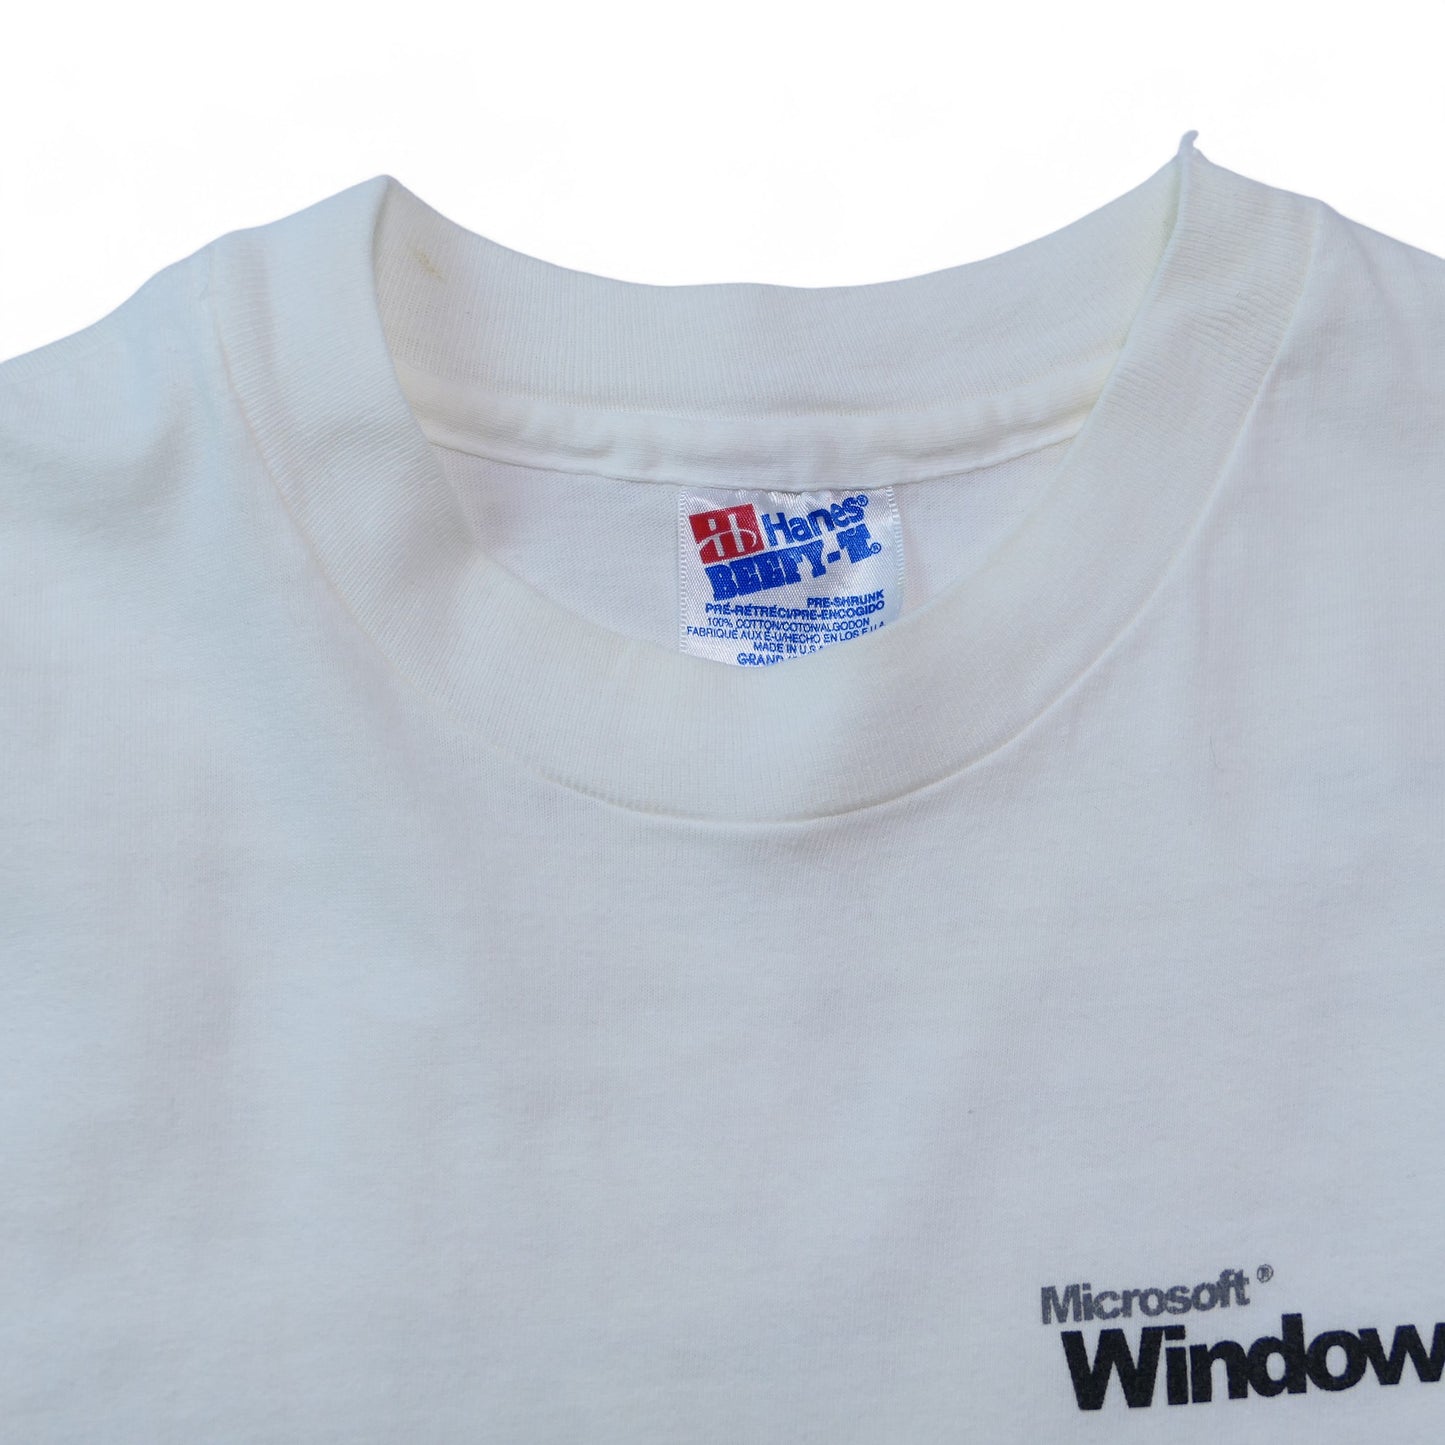 VINTAGE 90s L-XL Promotion Tee "Windows95" -Microsoft-